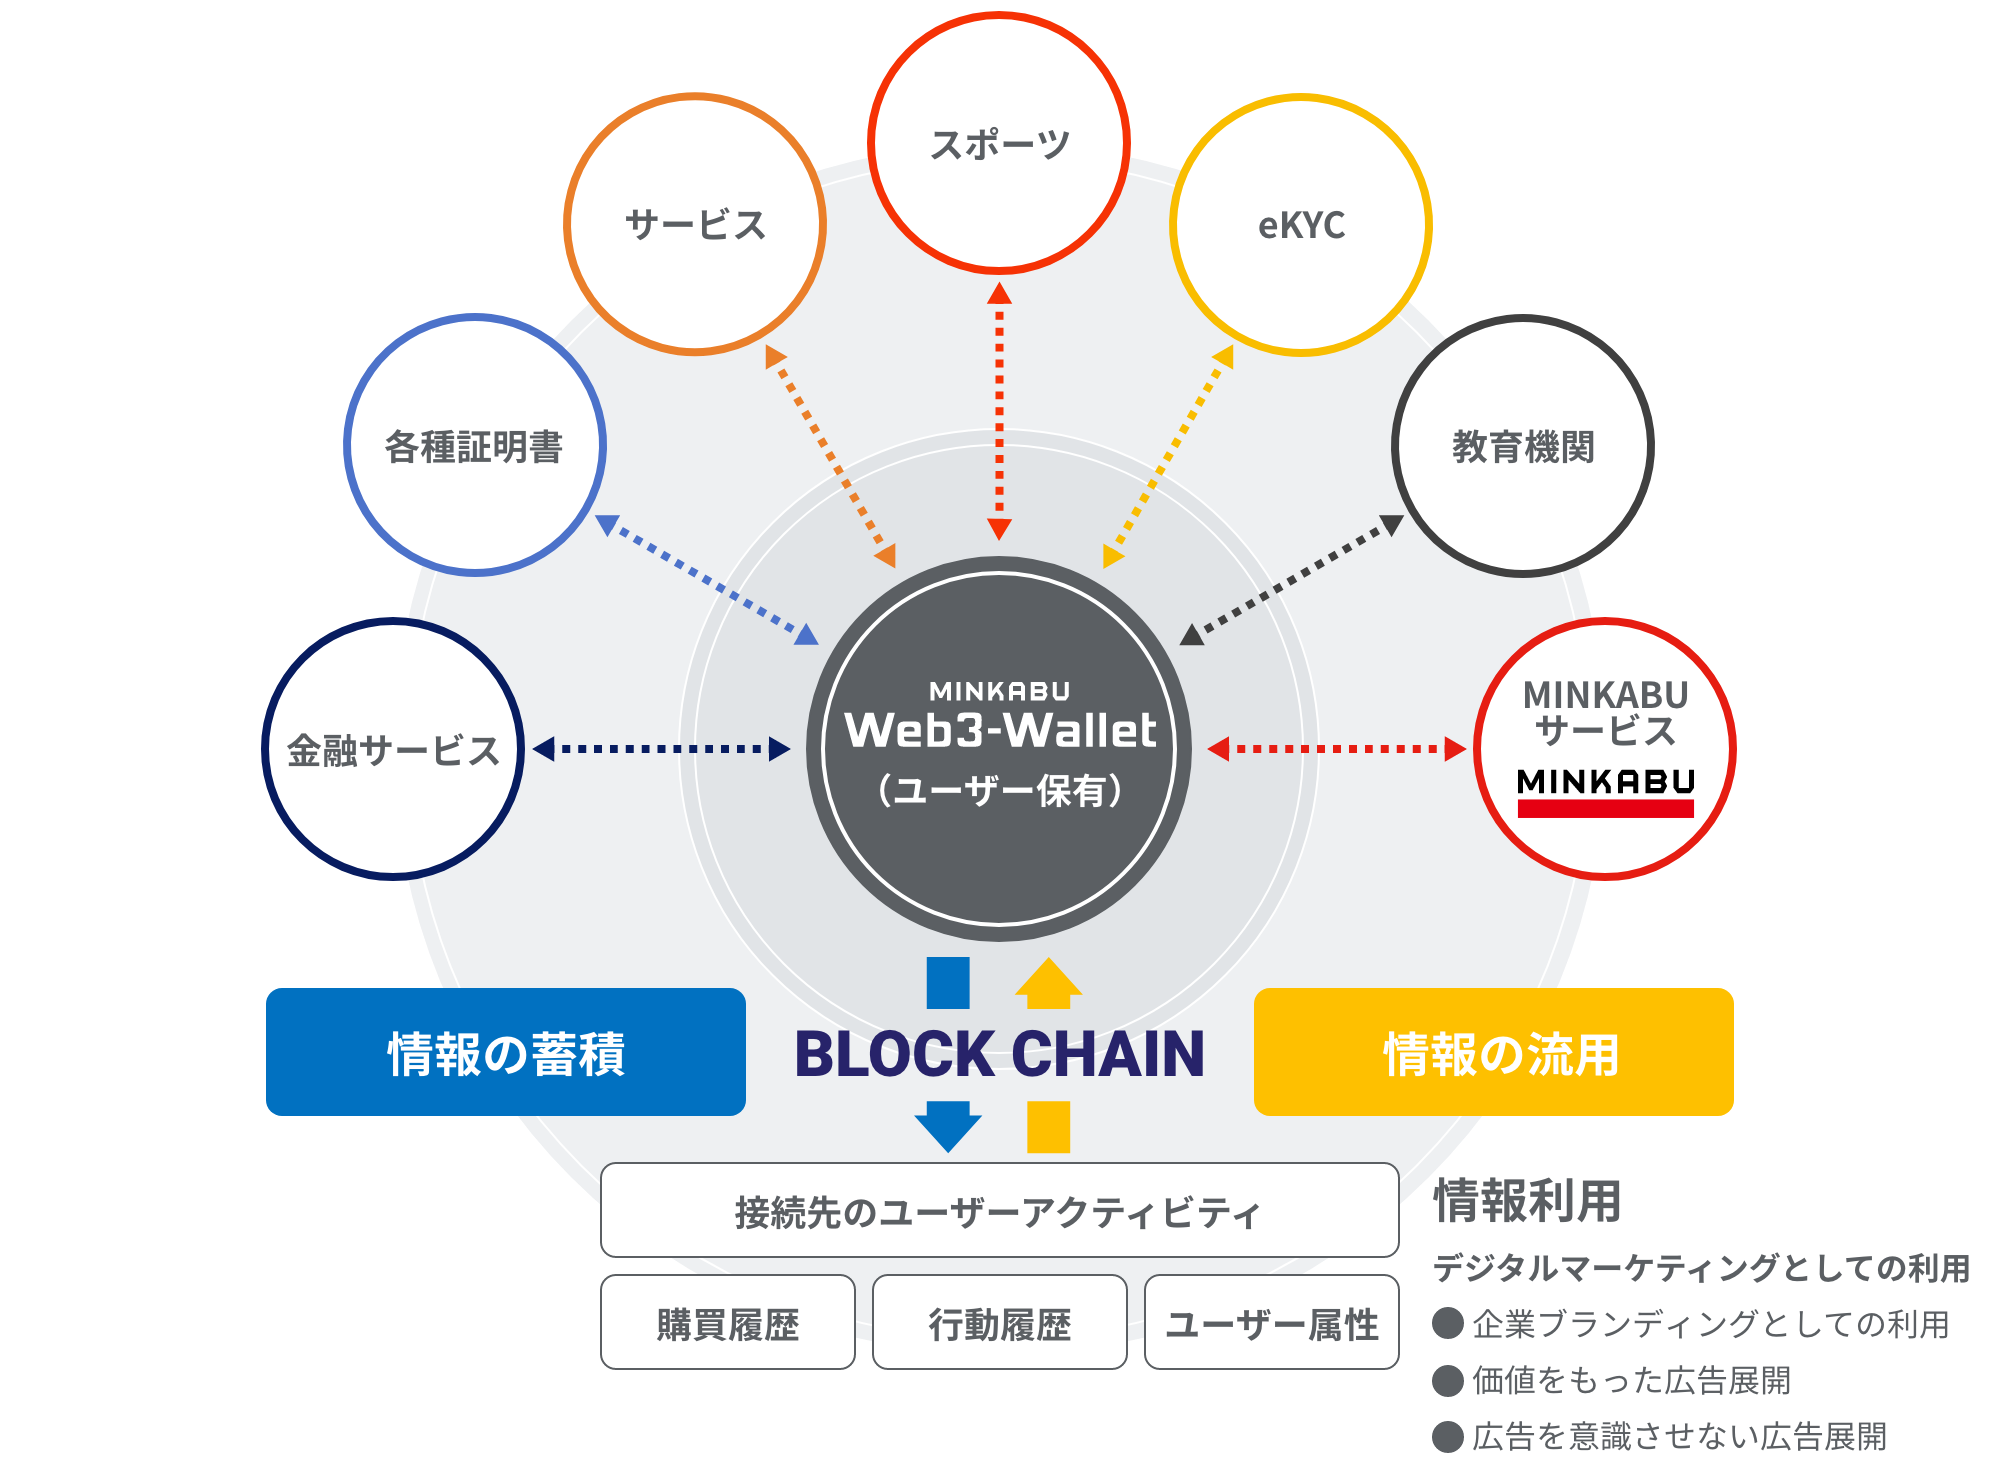 MINKABU Web3-Wallet サービス連携